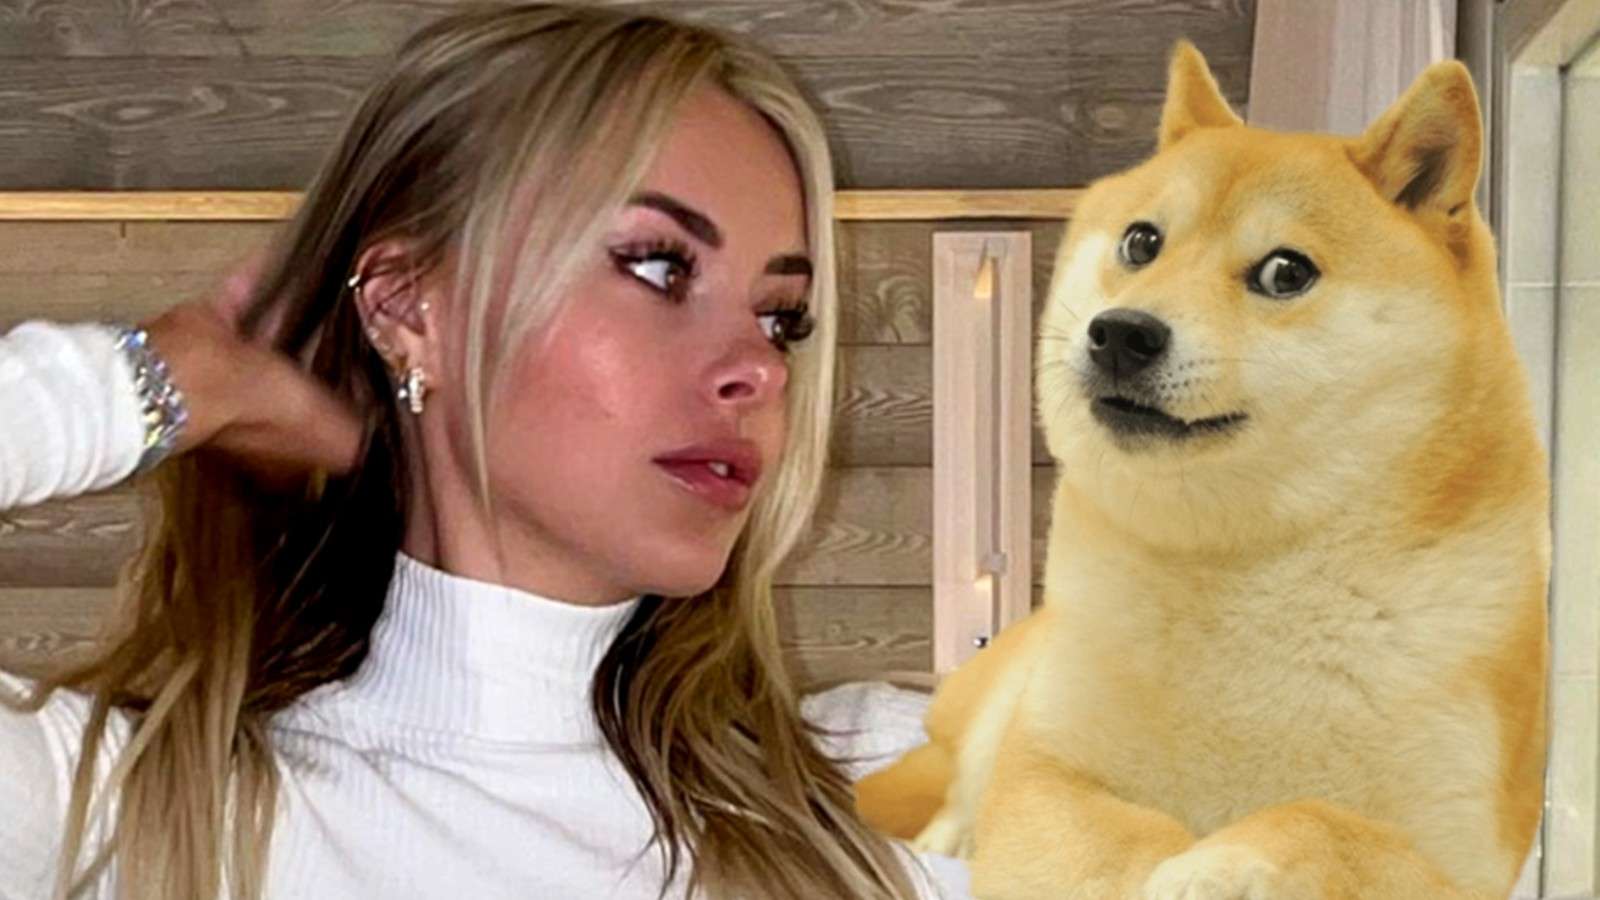 Corinna Kopf next to the Doge meme